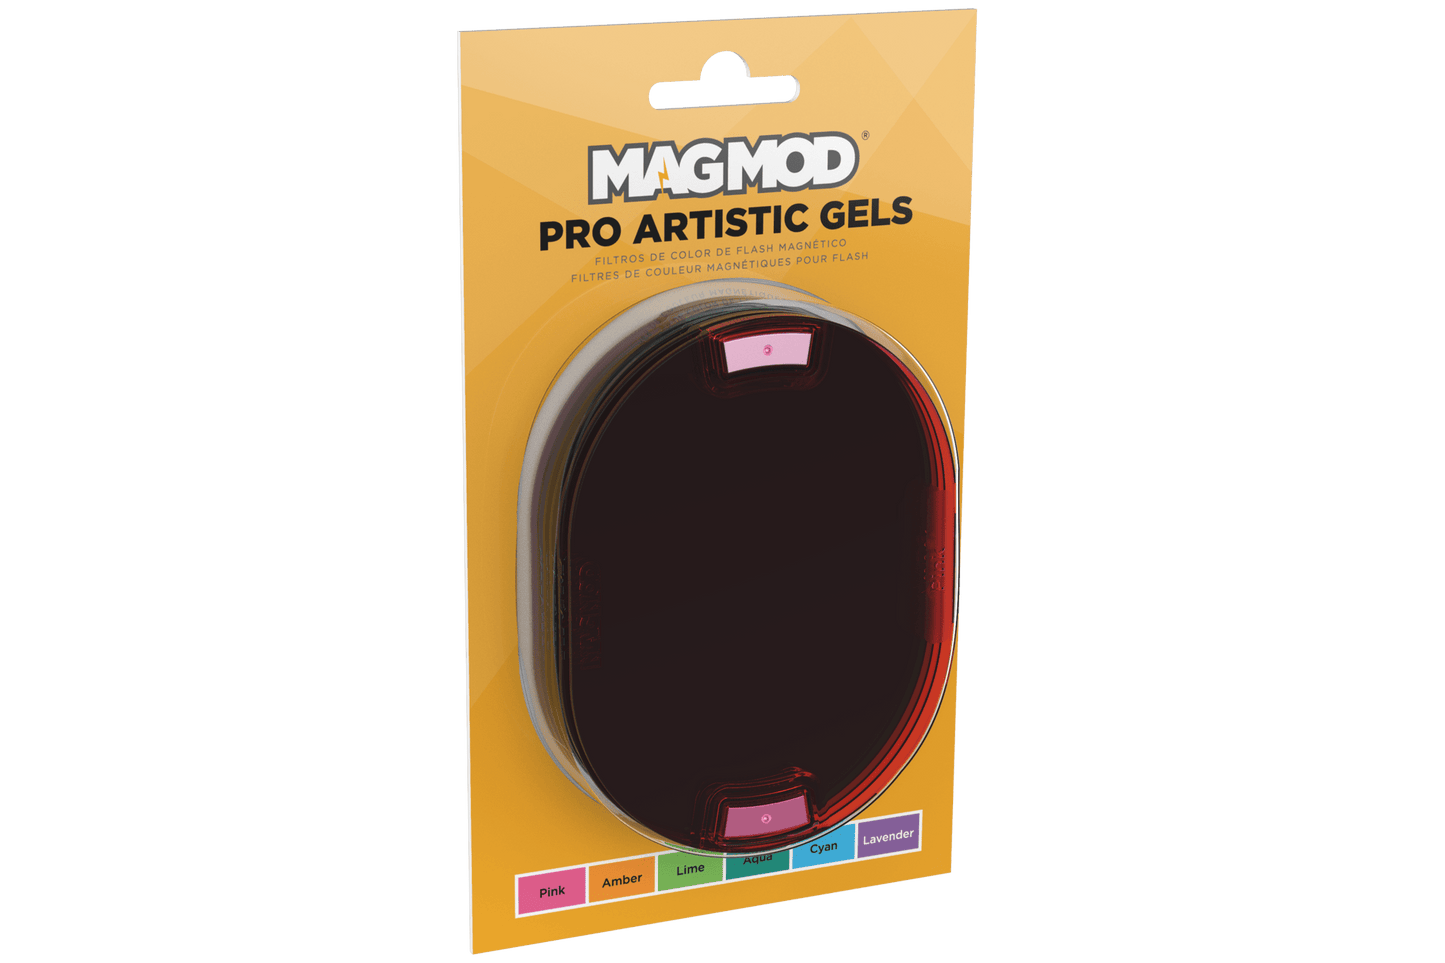 Pro Artistic Gels - MagnetMod